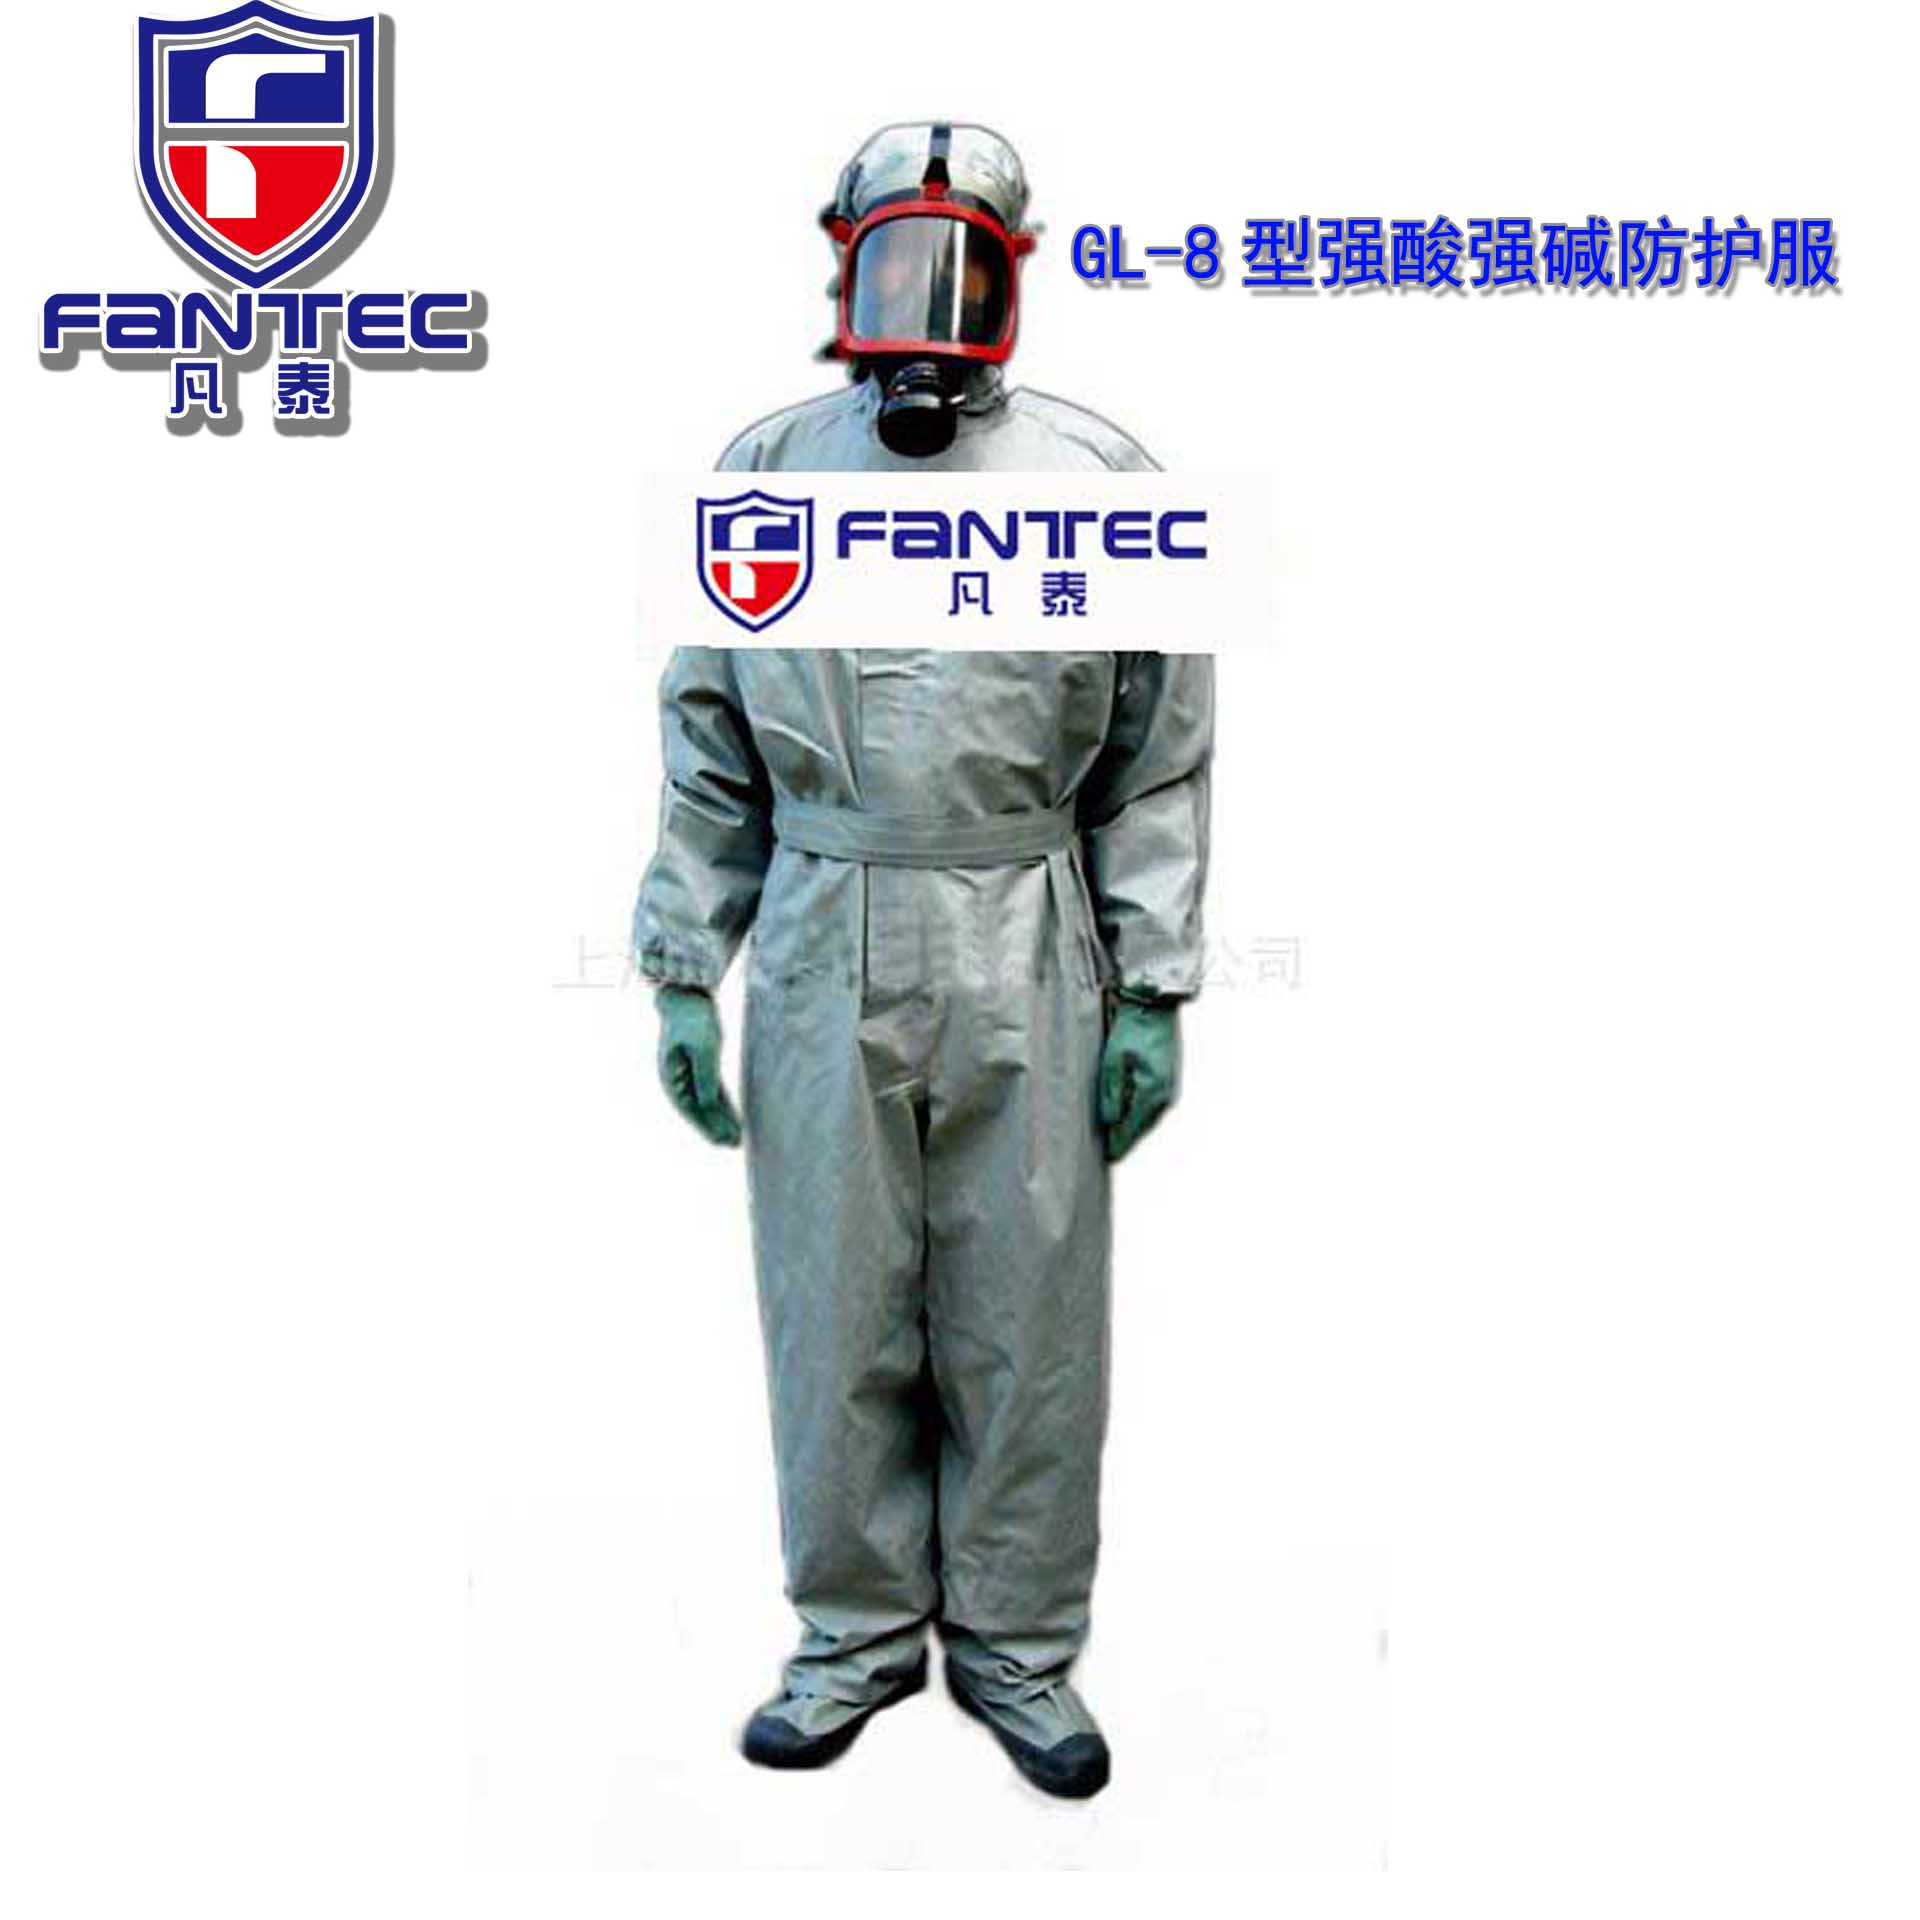 GL-8型強酸強堿防護服,強酸強堿防化服